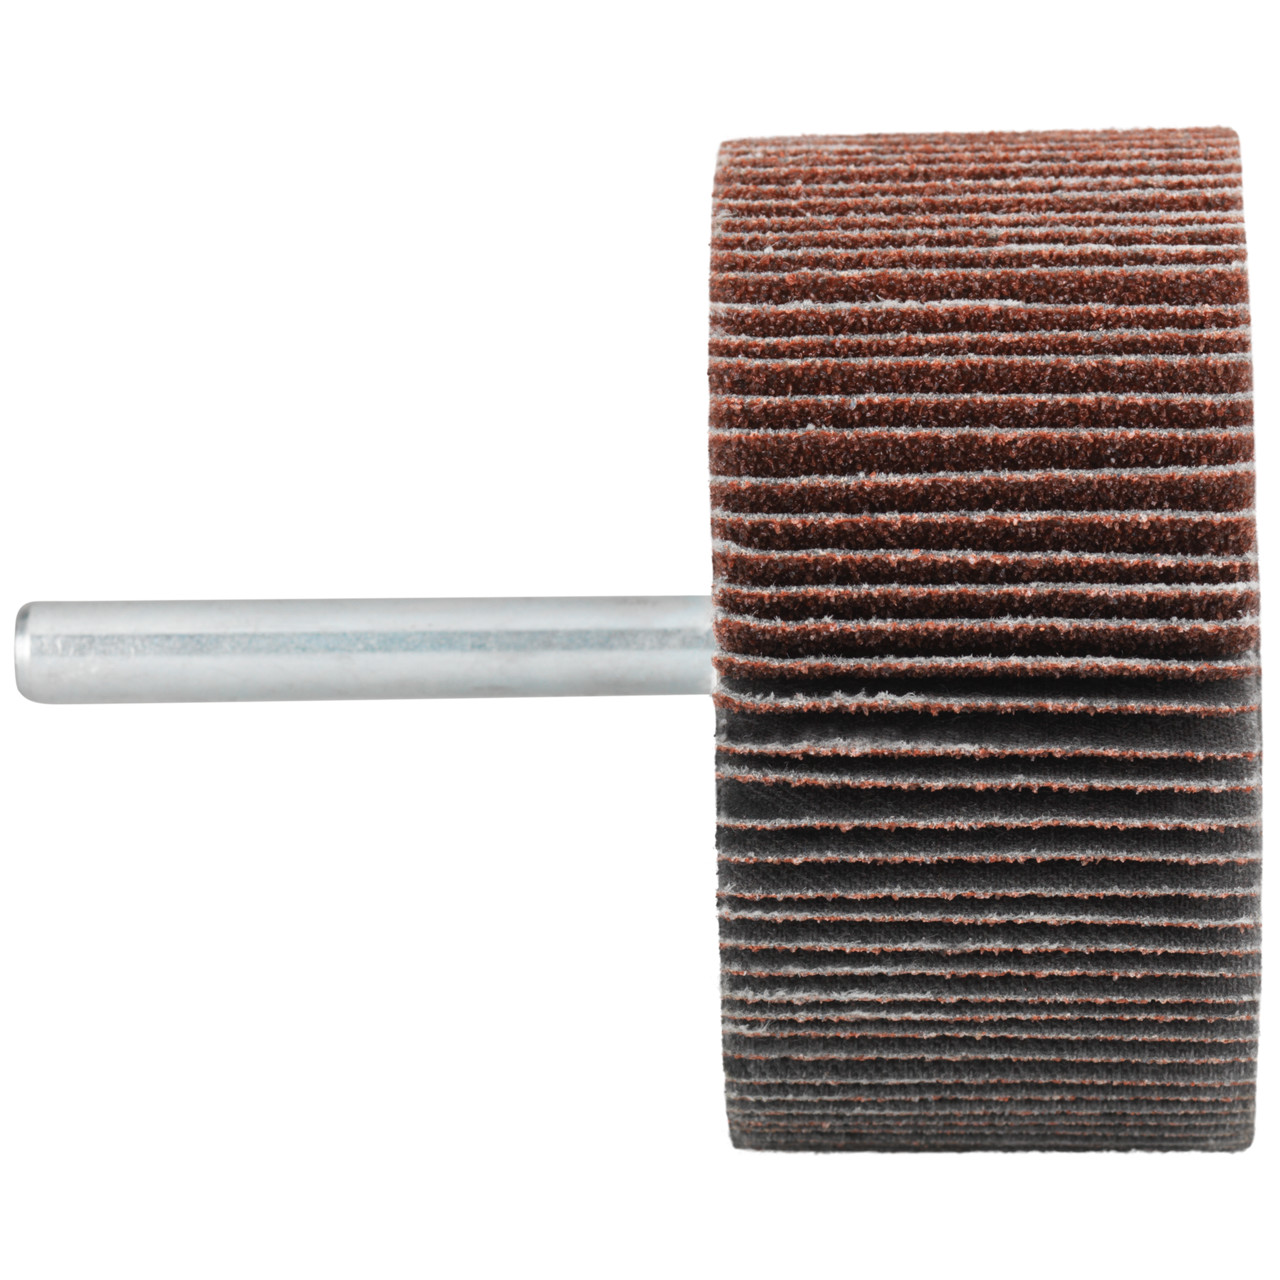 Tyrolit A-P01 C X Perni DxD 60x30 Per acciaio, acciaio inox e metalli non ferrosi, P150, forma: 52LA, Art. 816962